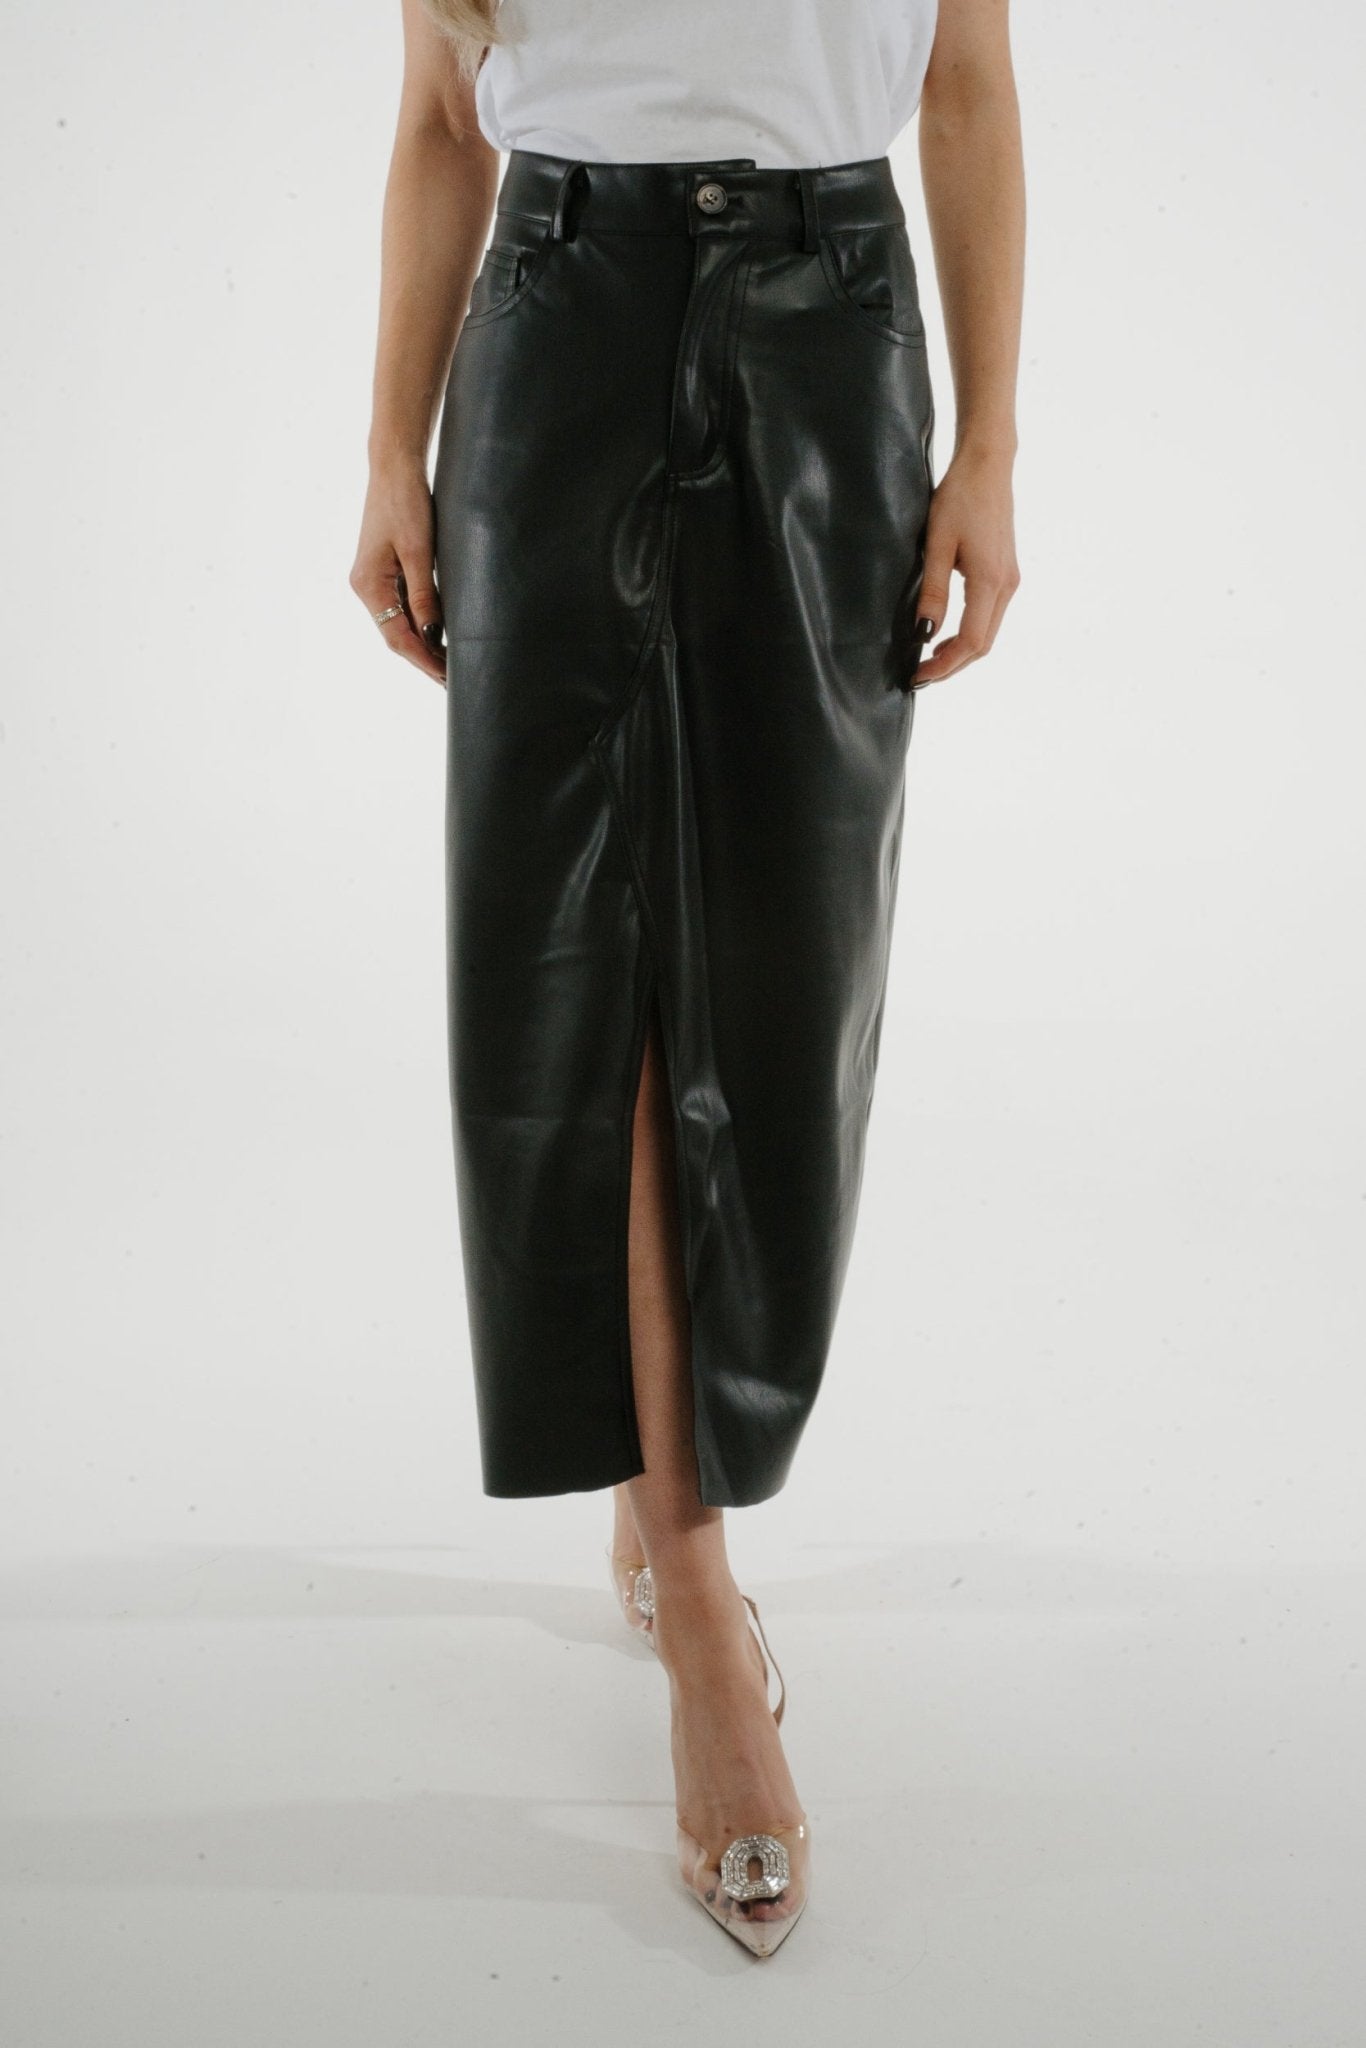 Jane Faux Leather Midi Skirt In Black - The Walk in Wardrobe